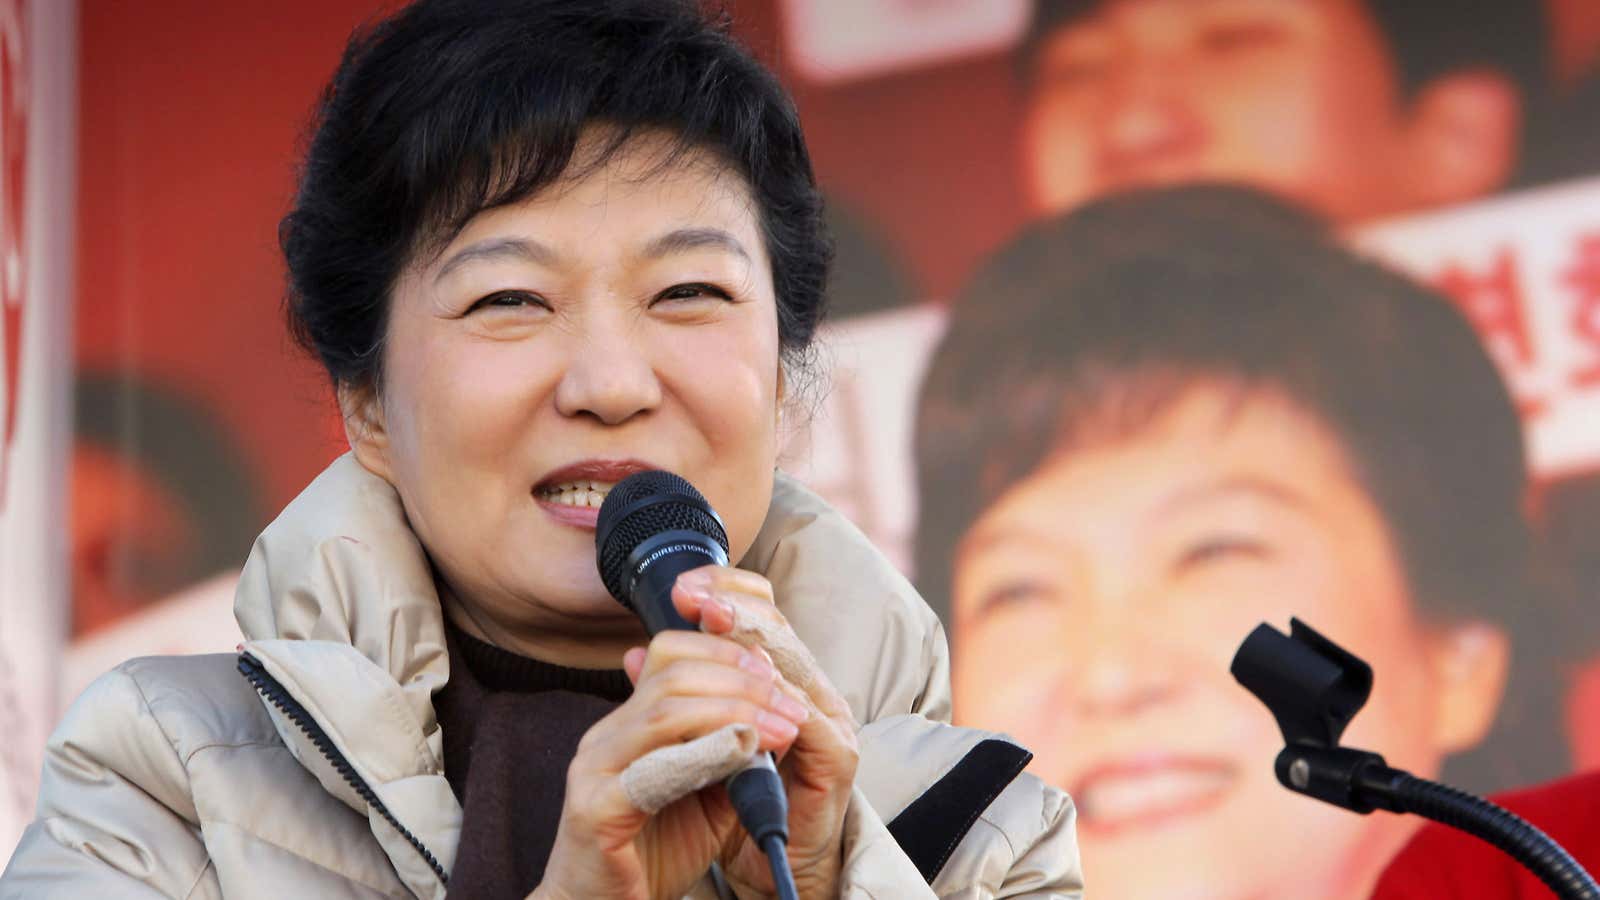 South Koreans elected Park Geun-hye as their new president